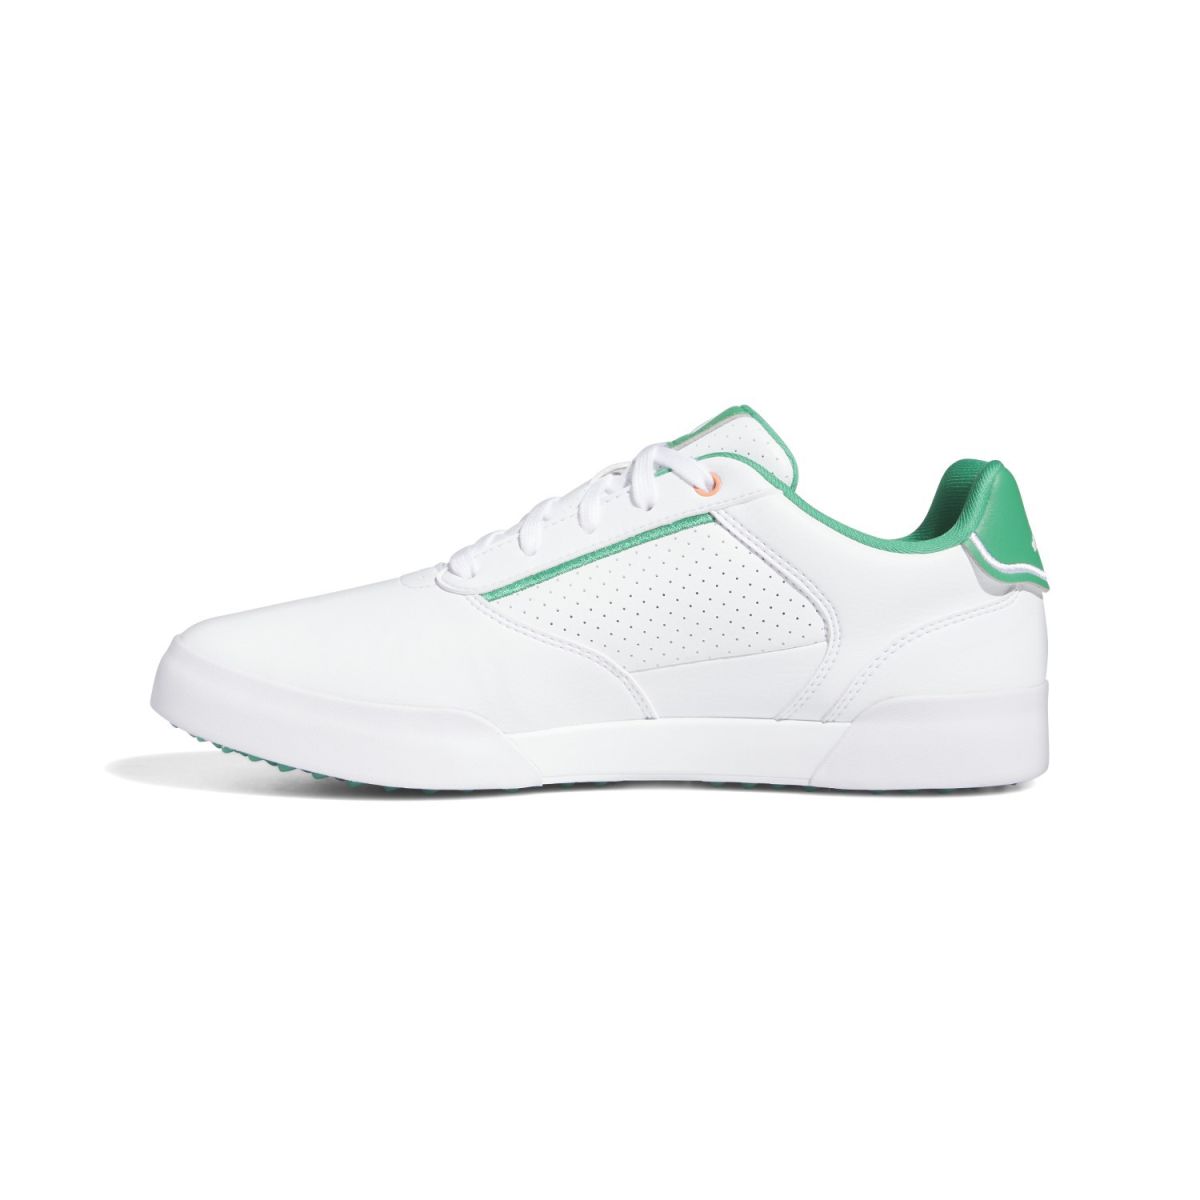 adidas retrocross white green 50 23